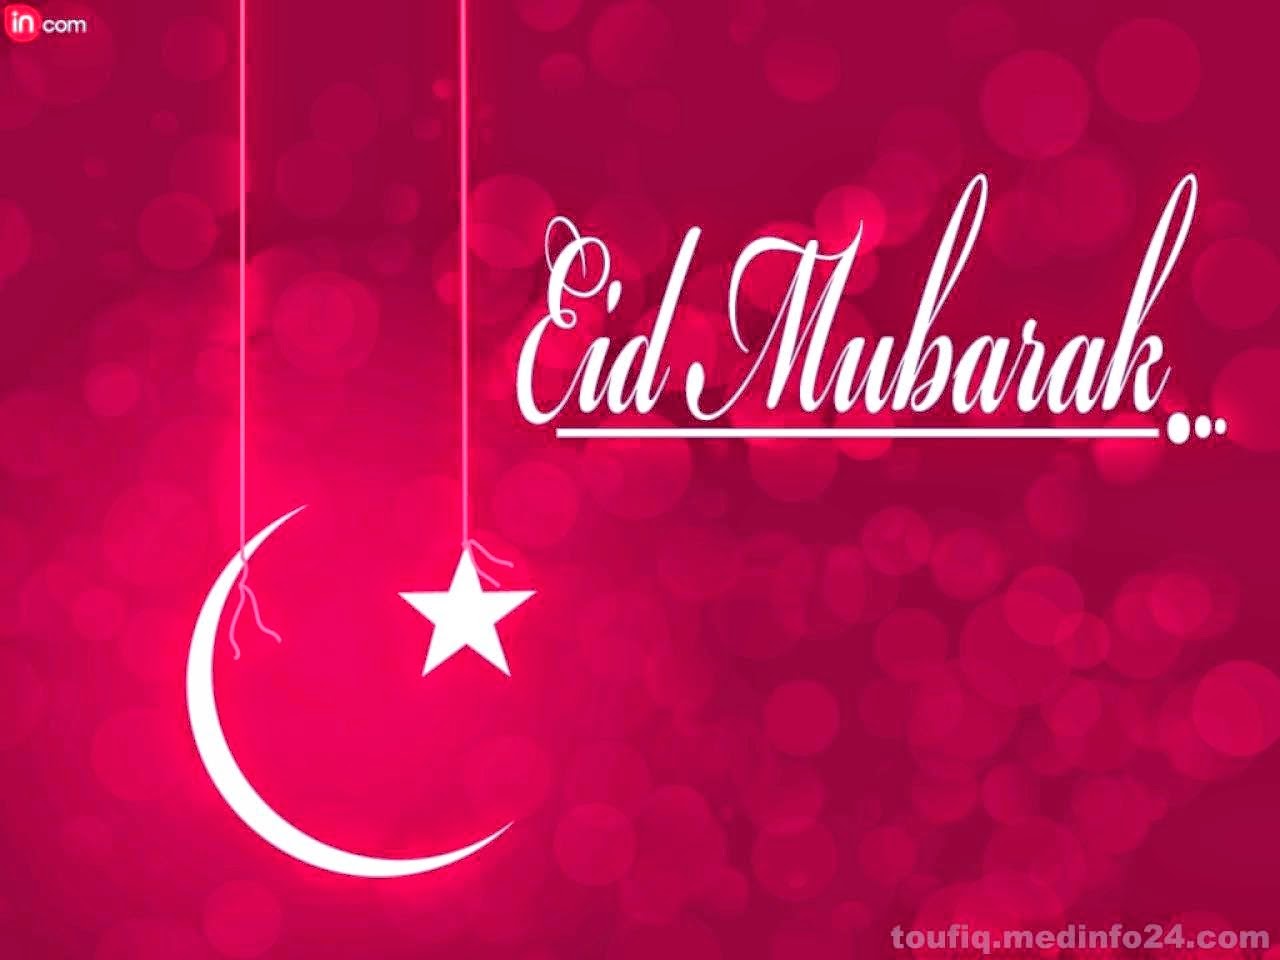 Most Selected Eid Mubarak Images 2018 And Eid Mubarak HD 